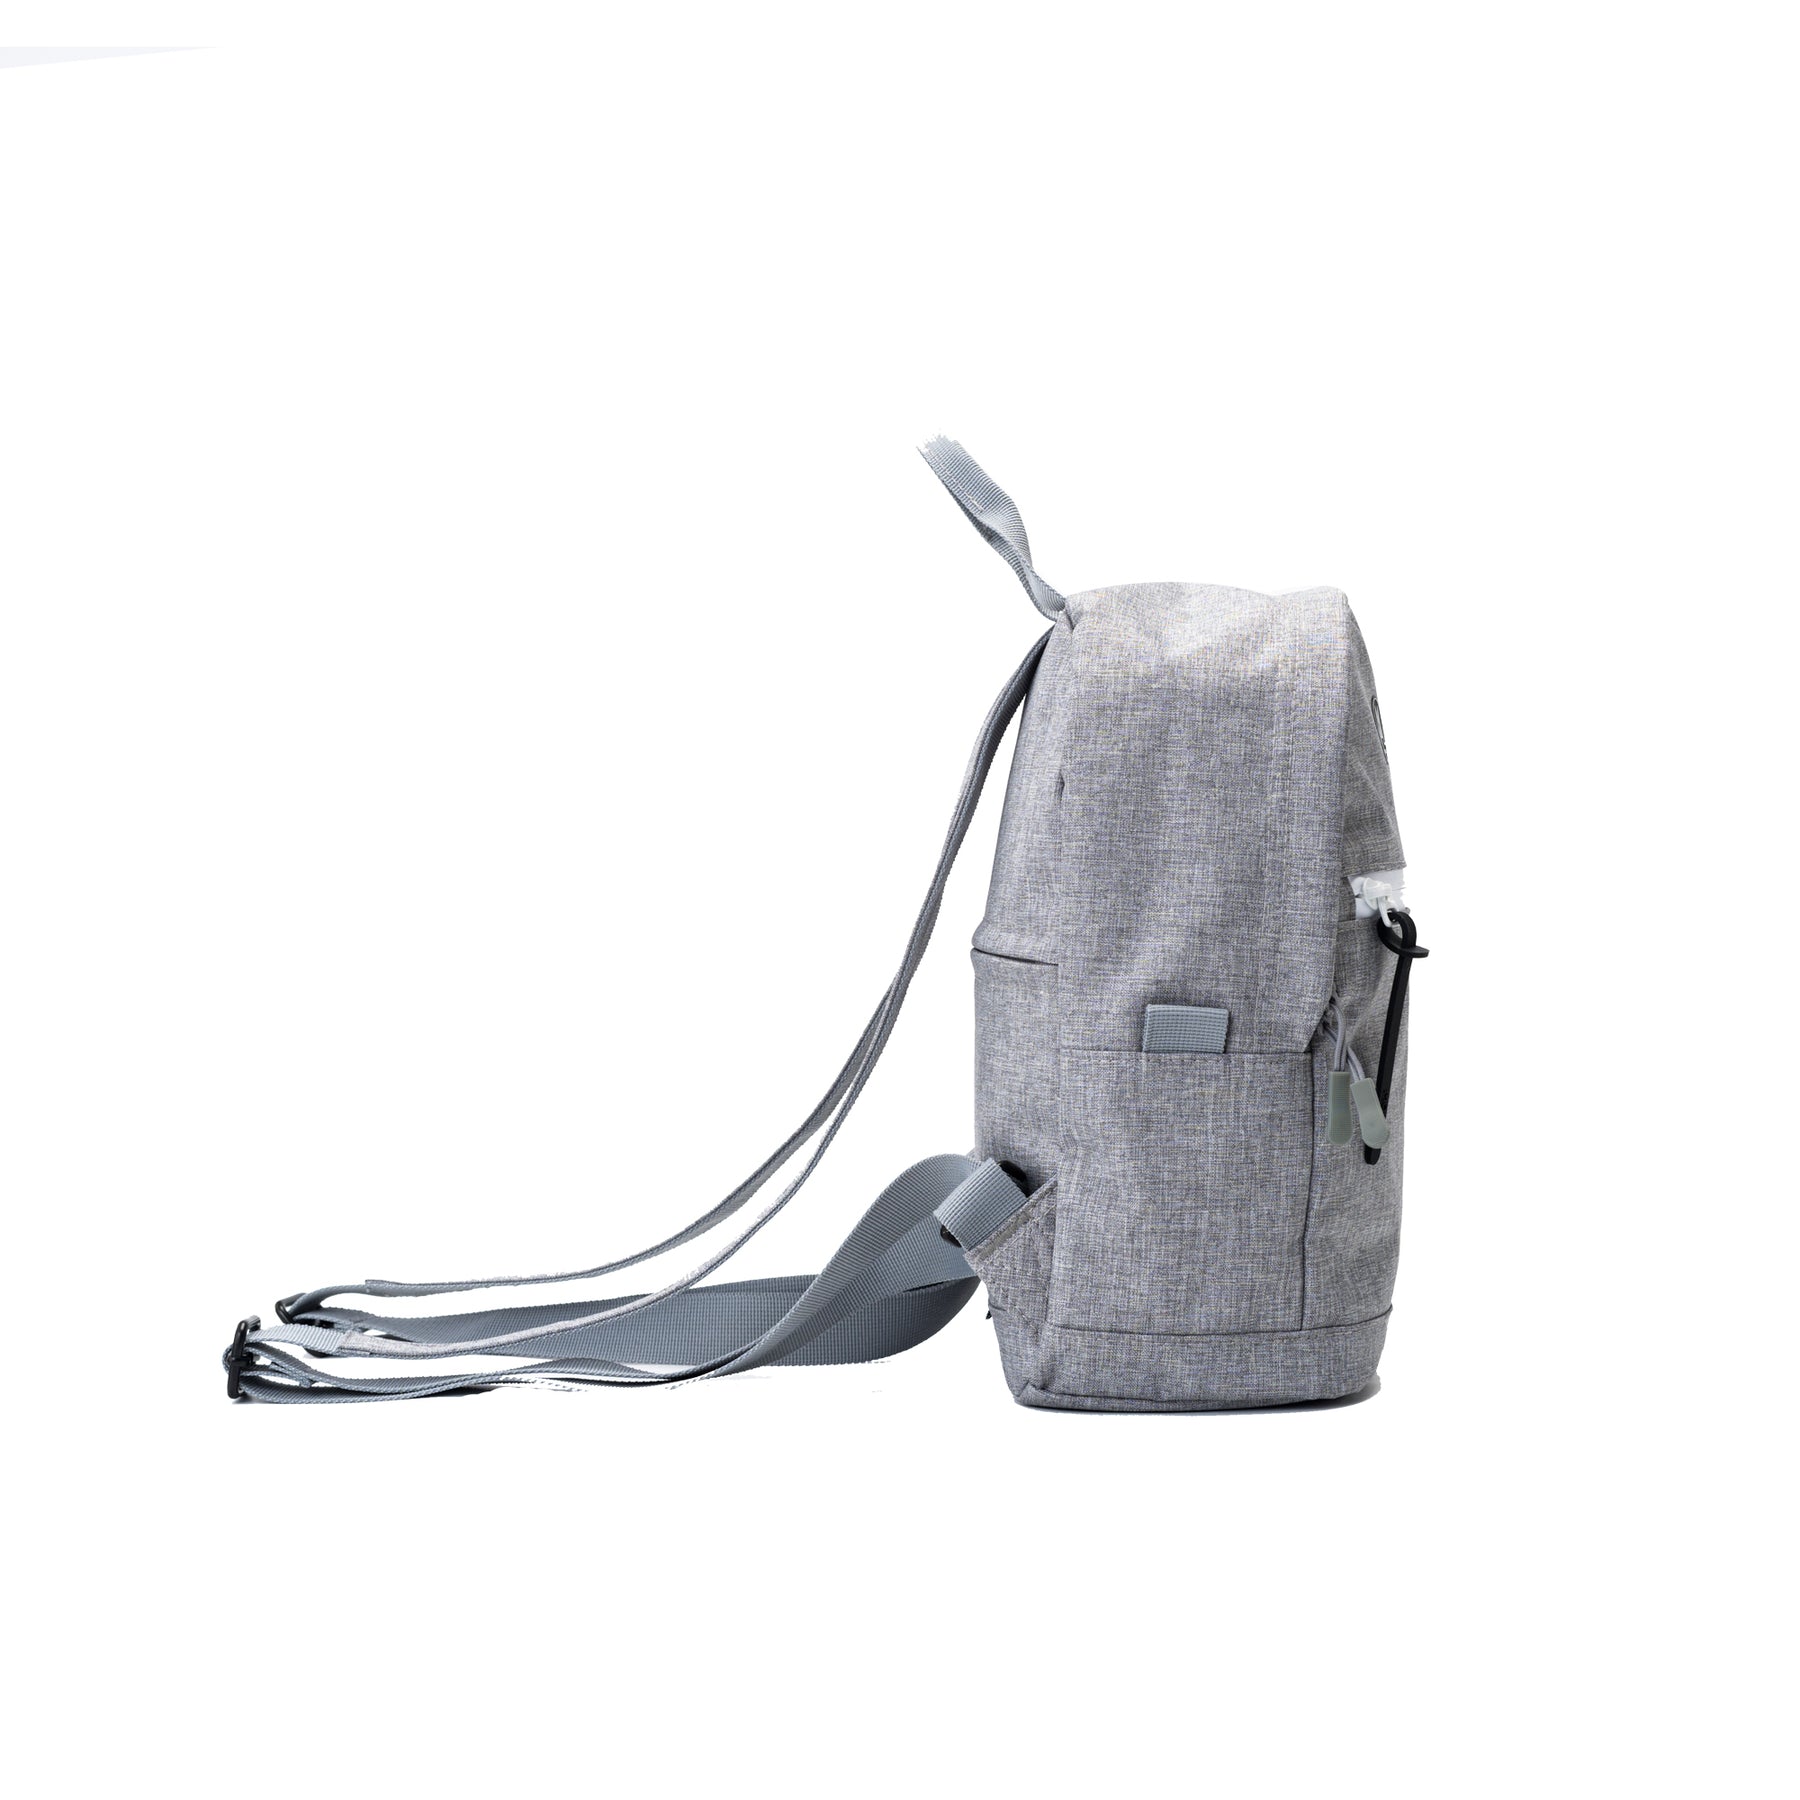 Tait Backpack - Mini